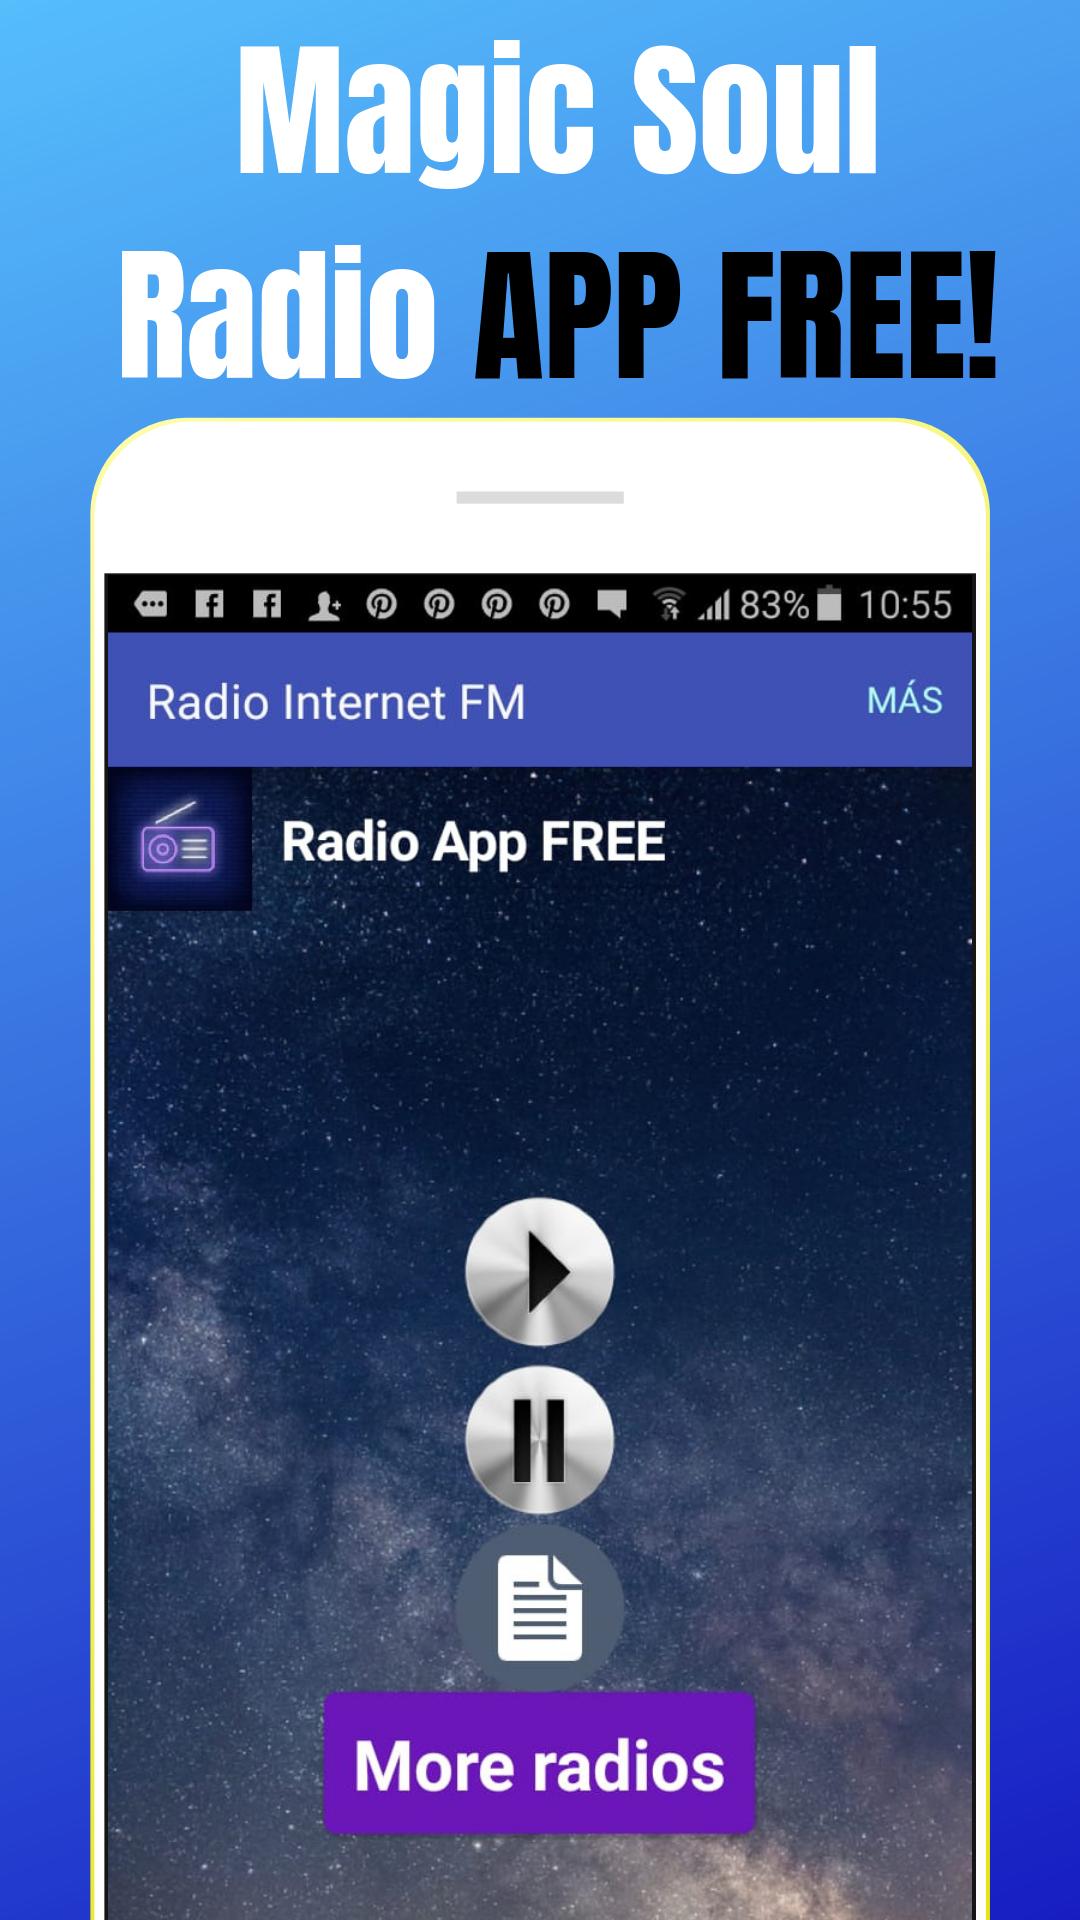 Magic Soul Radio FM UK App Free Online for Android - APK Download